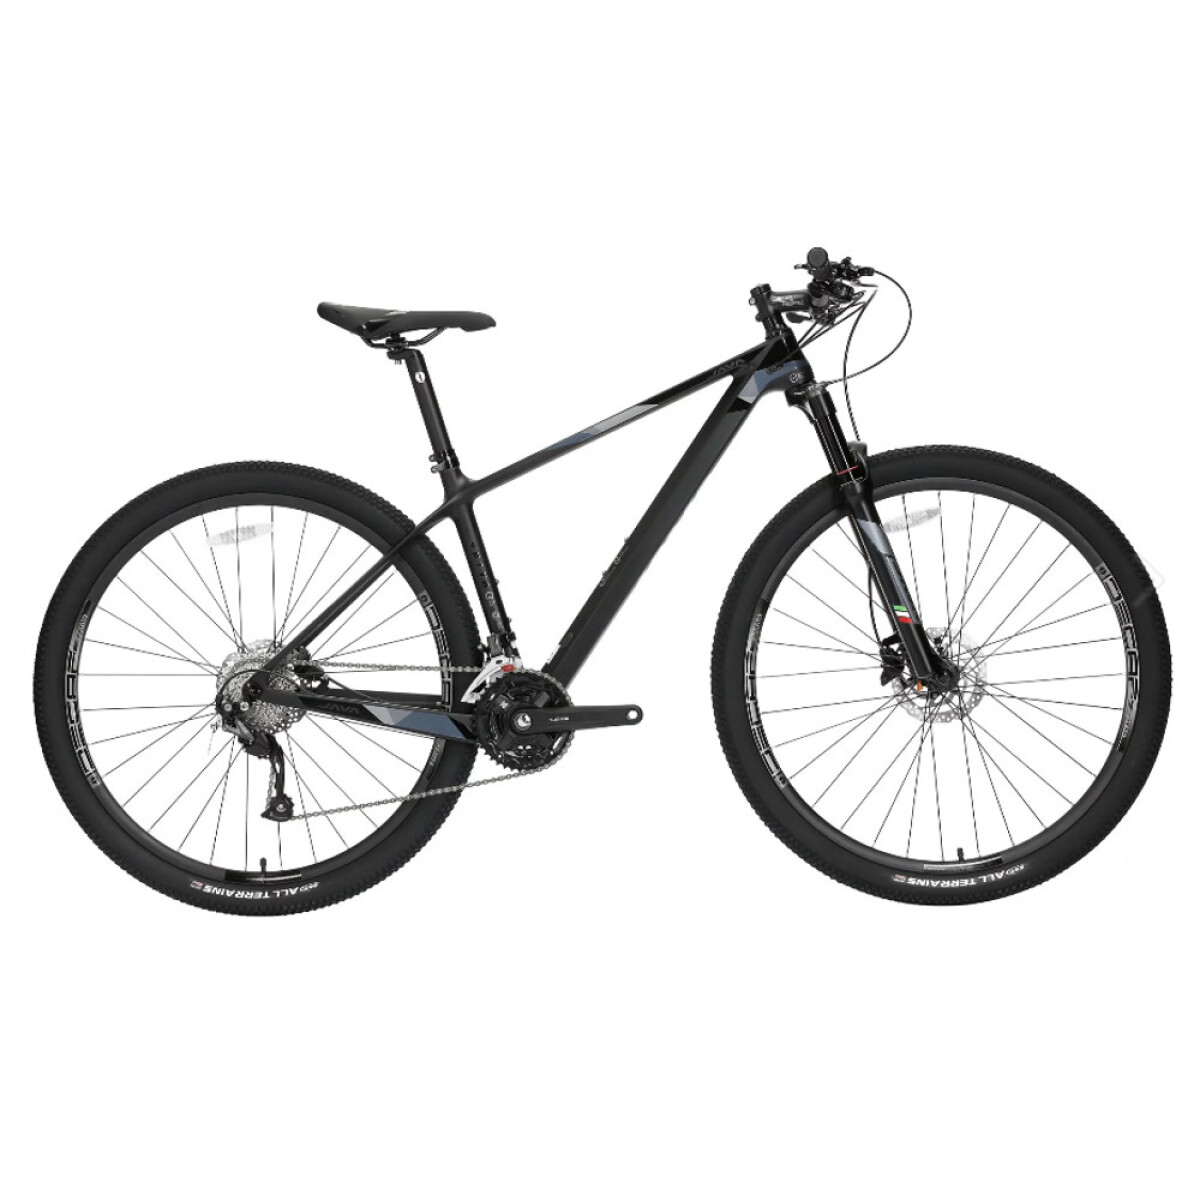 Java - Bicicleta Mtb- Vetta- Rodado 29", 30 Velocidades, Carbono, Talle 15". Color: Negro Mate. - 001 